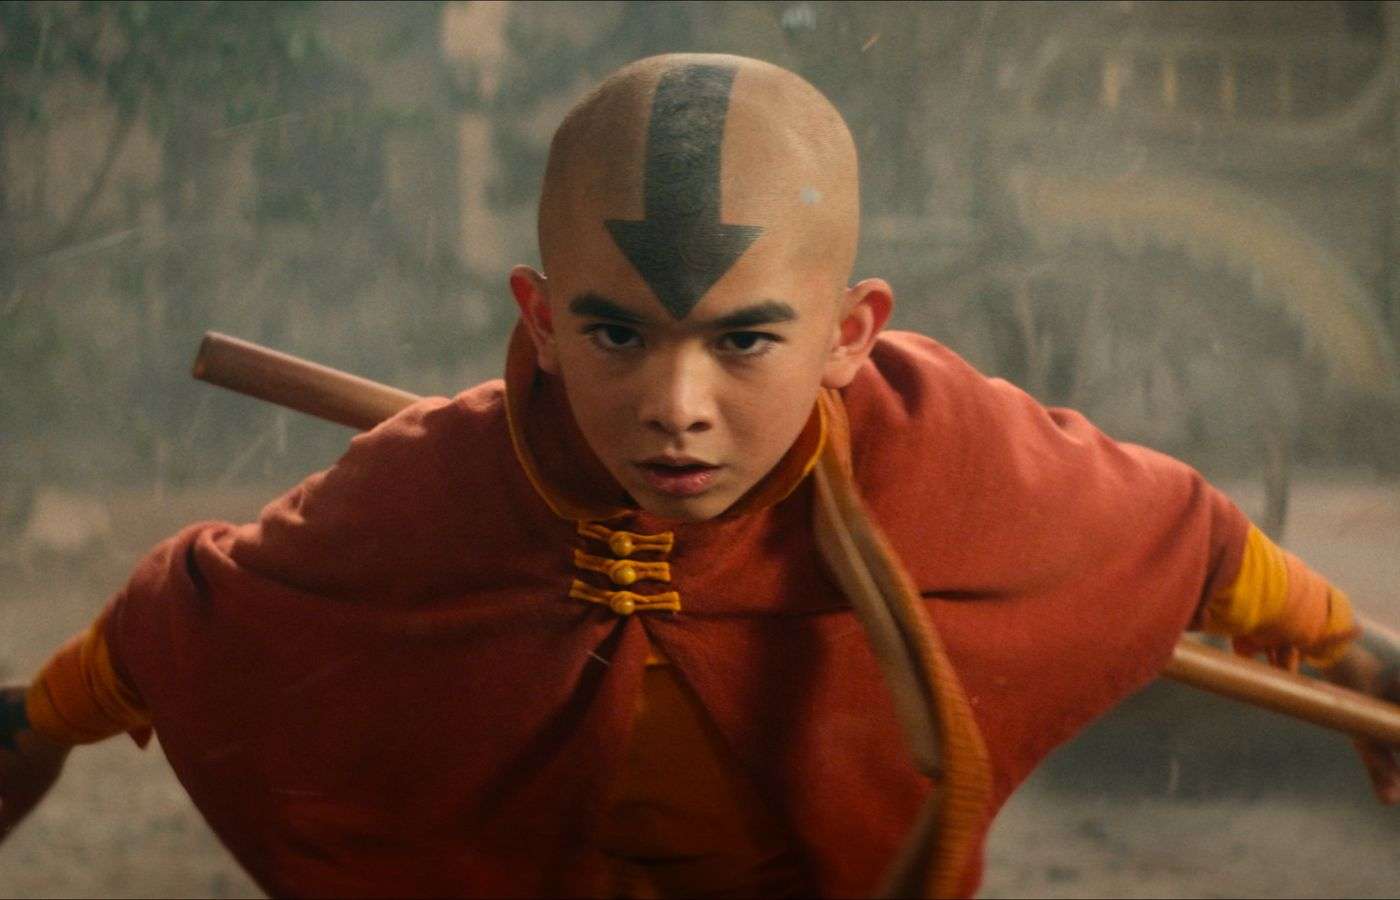 Aang in Netflix's Avatar: The Last Airbender